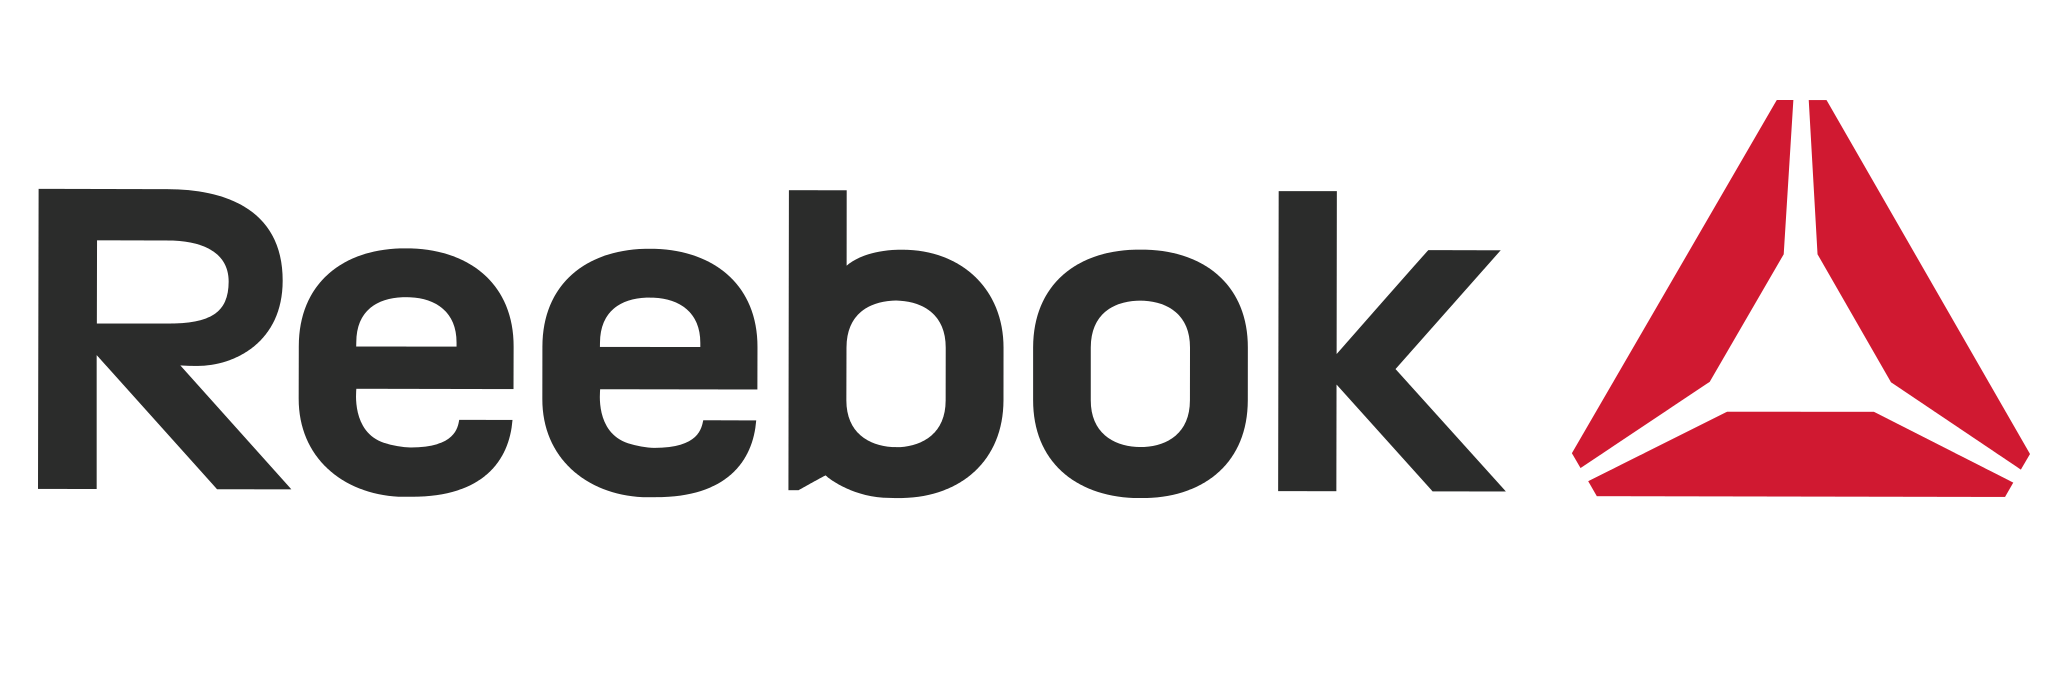 reebok logo transparent #7034